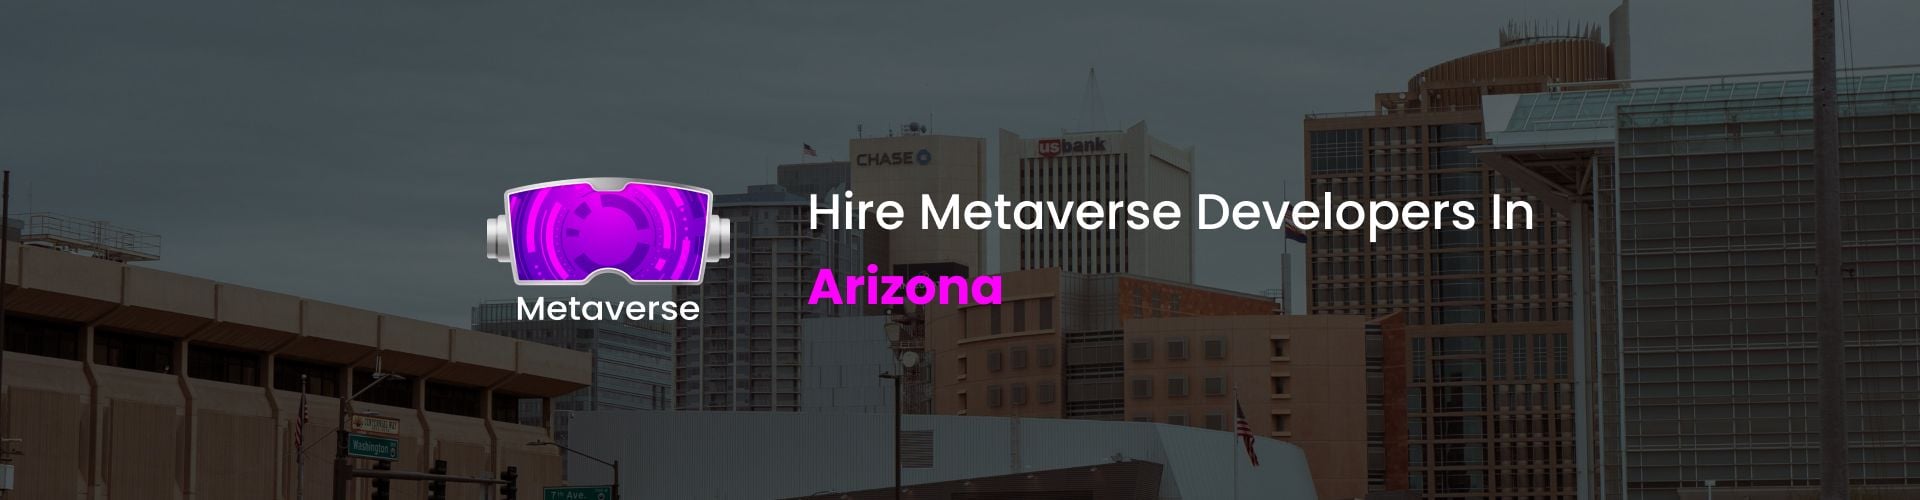 hire metaverse developers in arizona